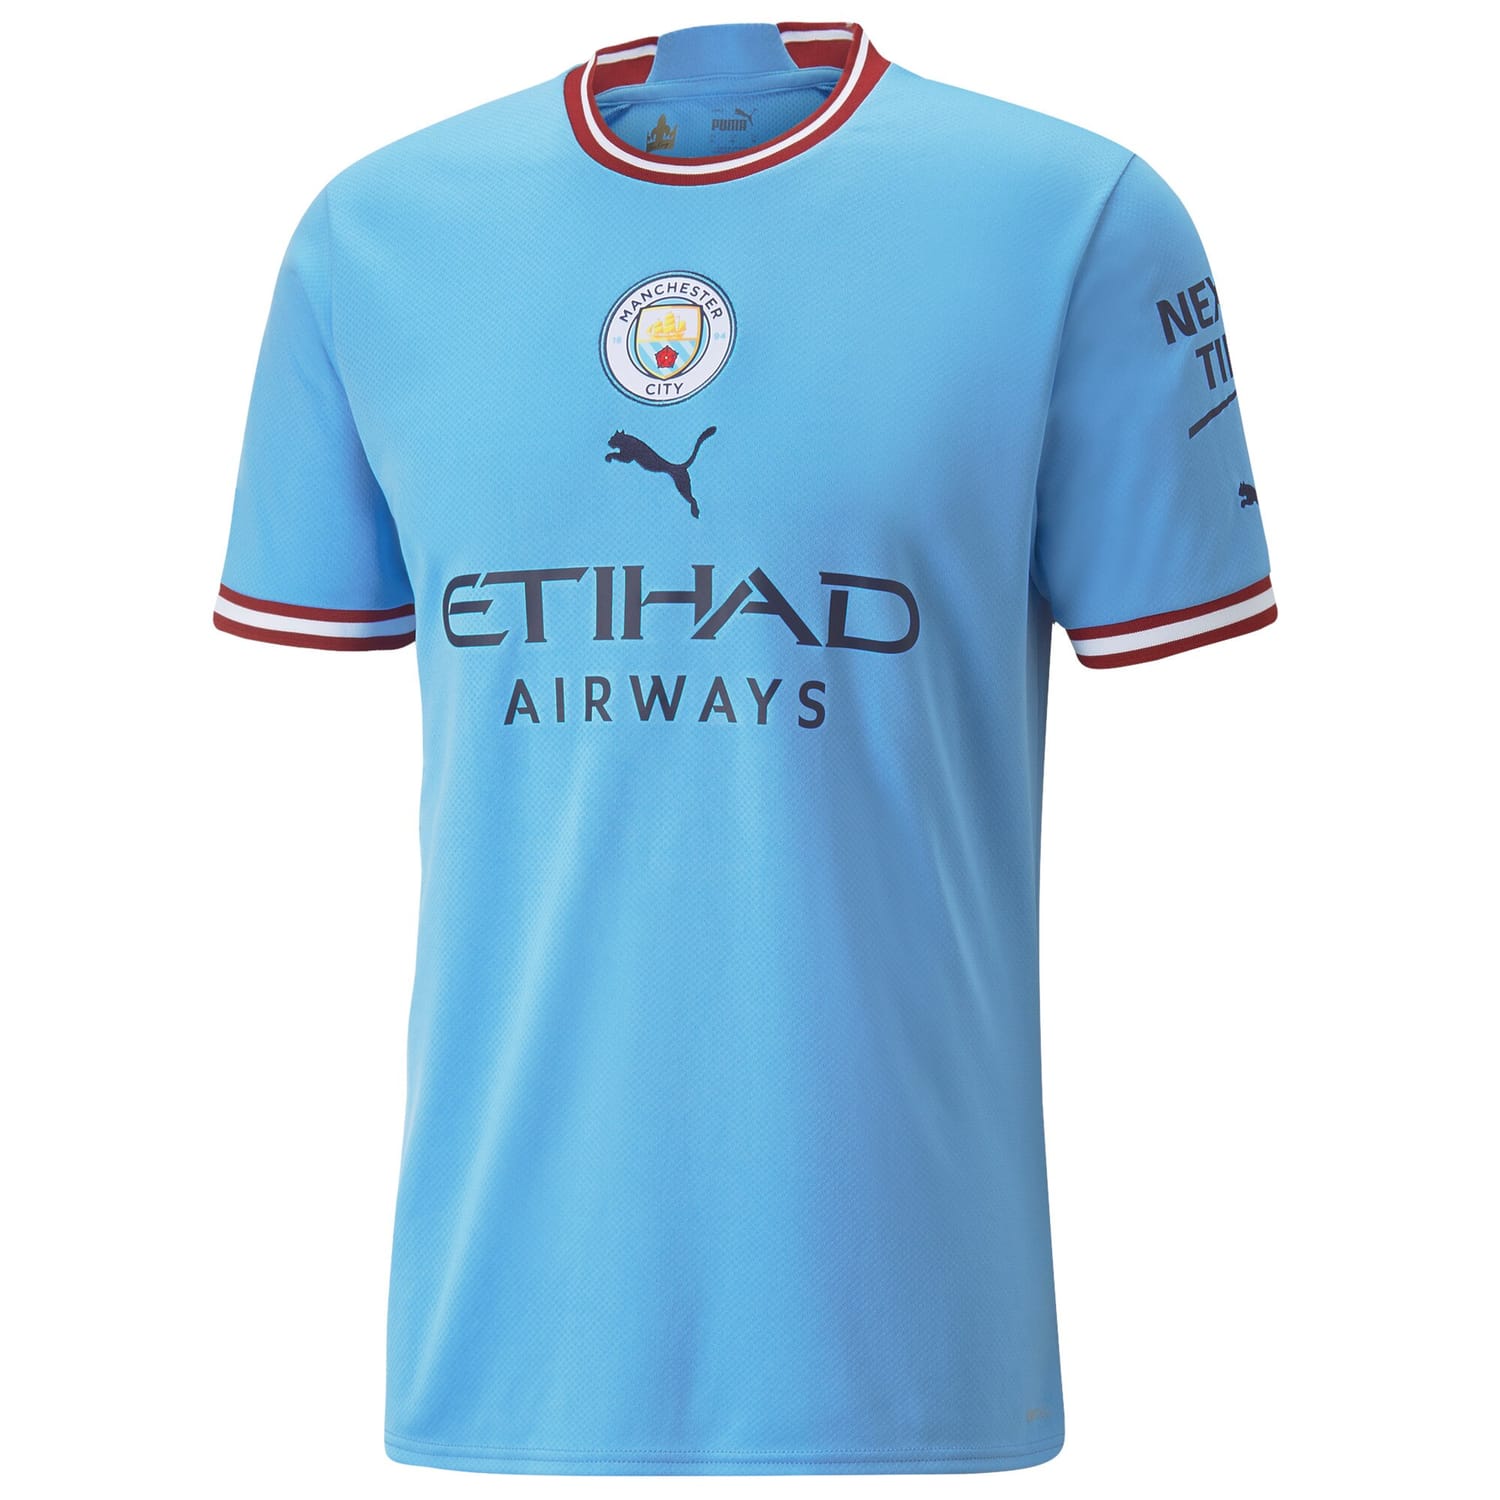 Premier League Manchester City Home Jersey Shirt 2022-23 player Bernardo Silva 20 printing for Men